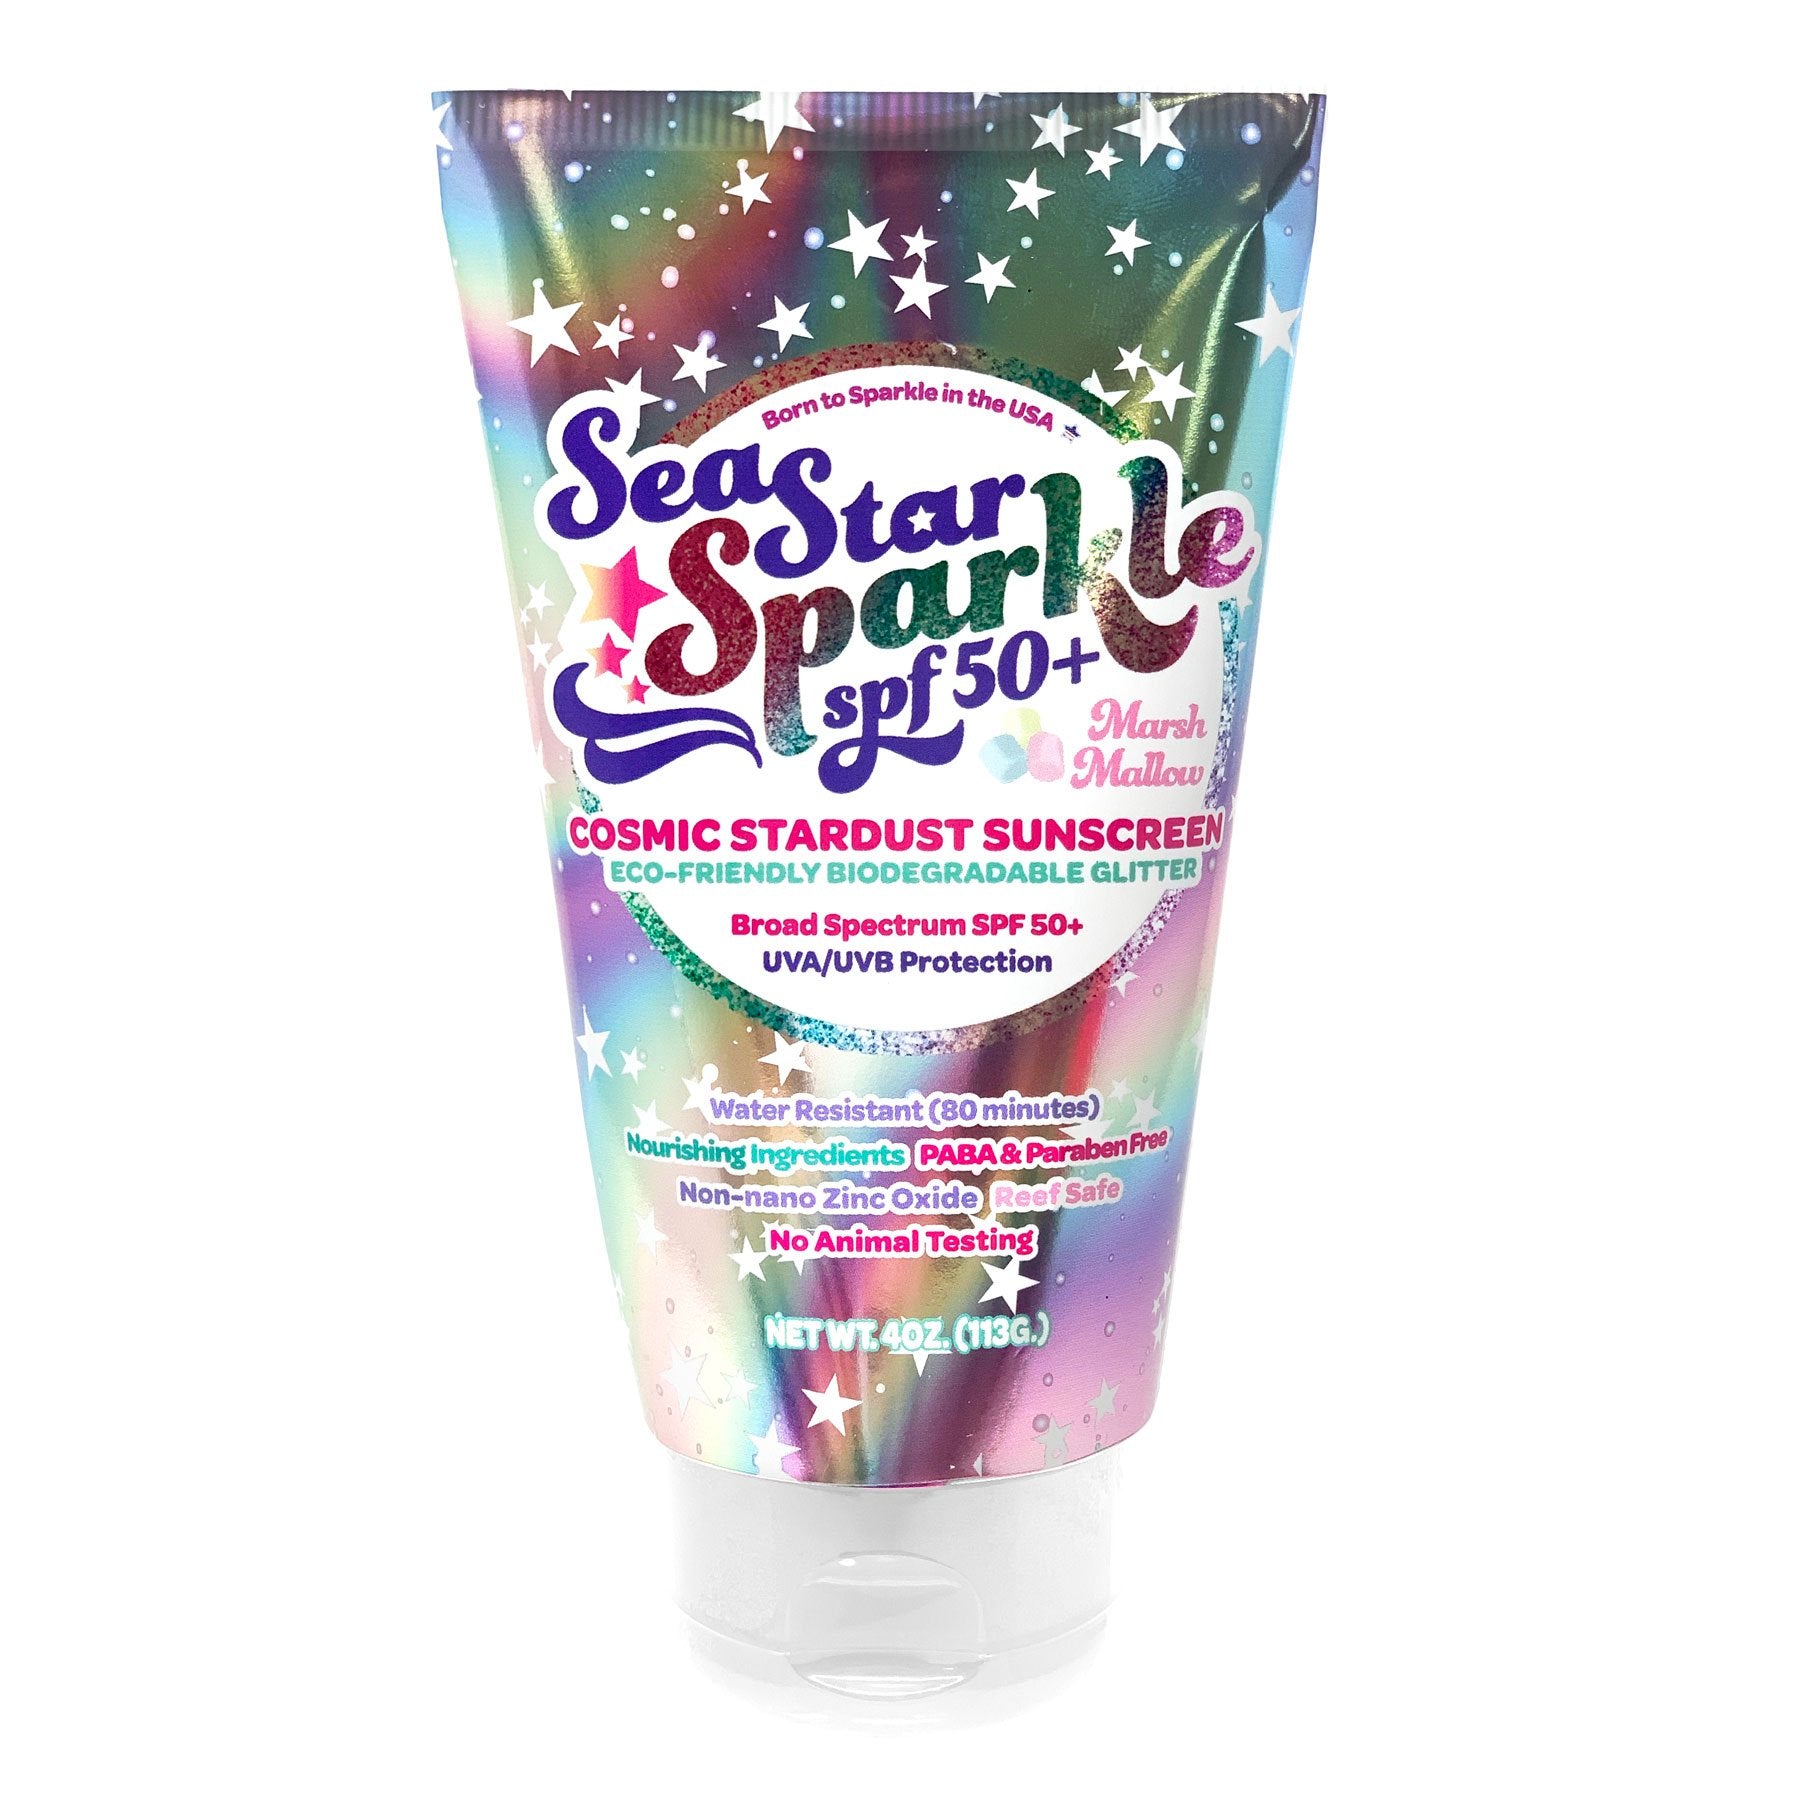 Sea Star Sparkle Glitter Sunscreen - SPF 50+